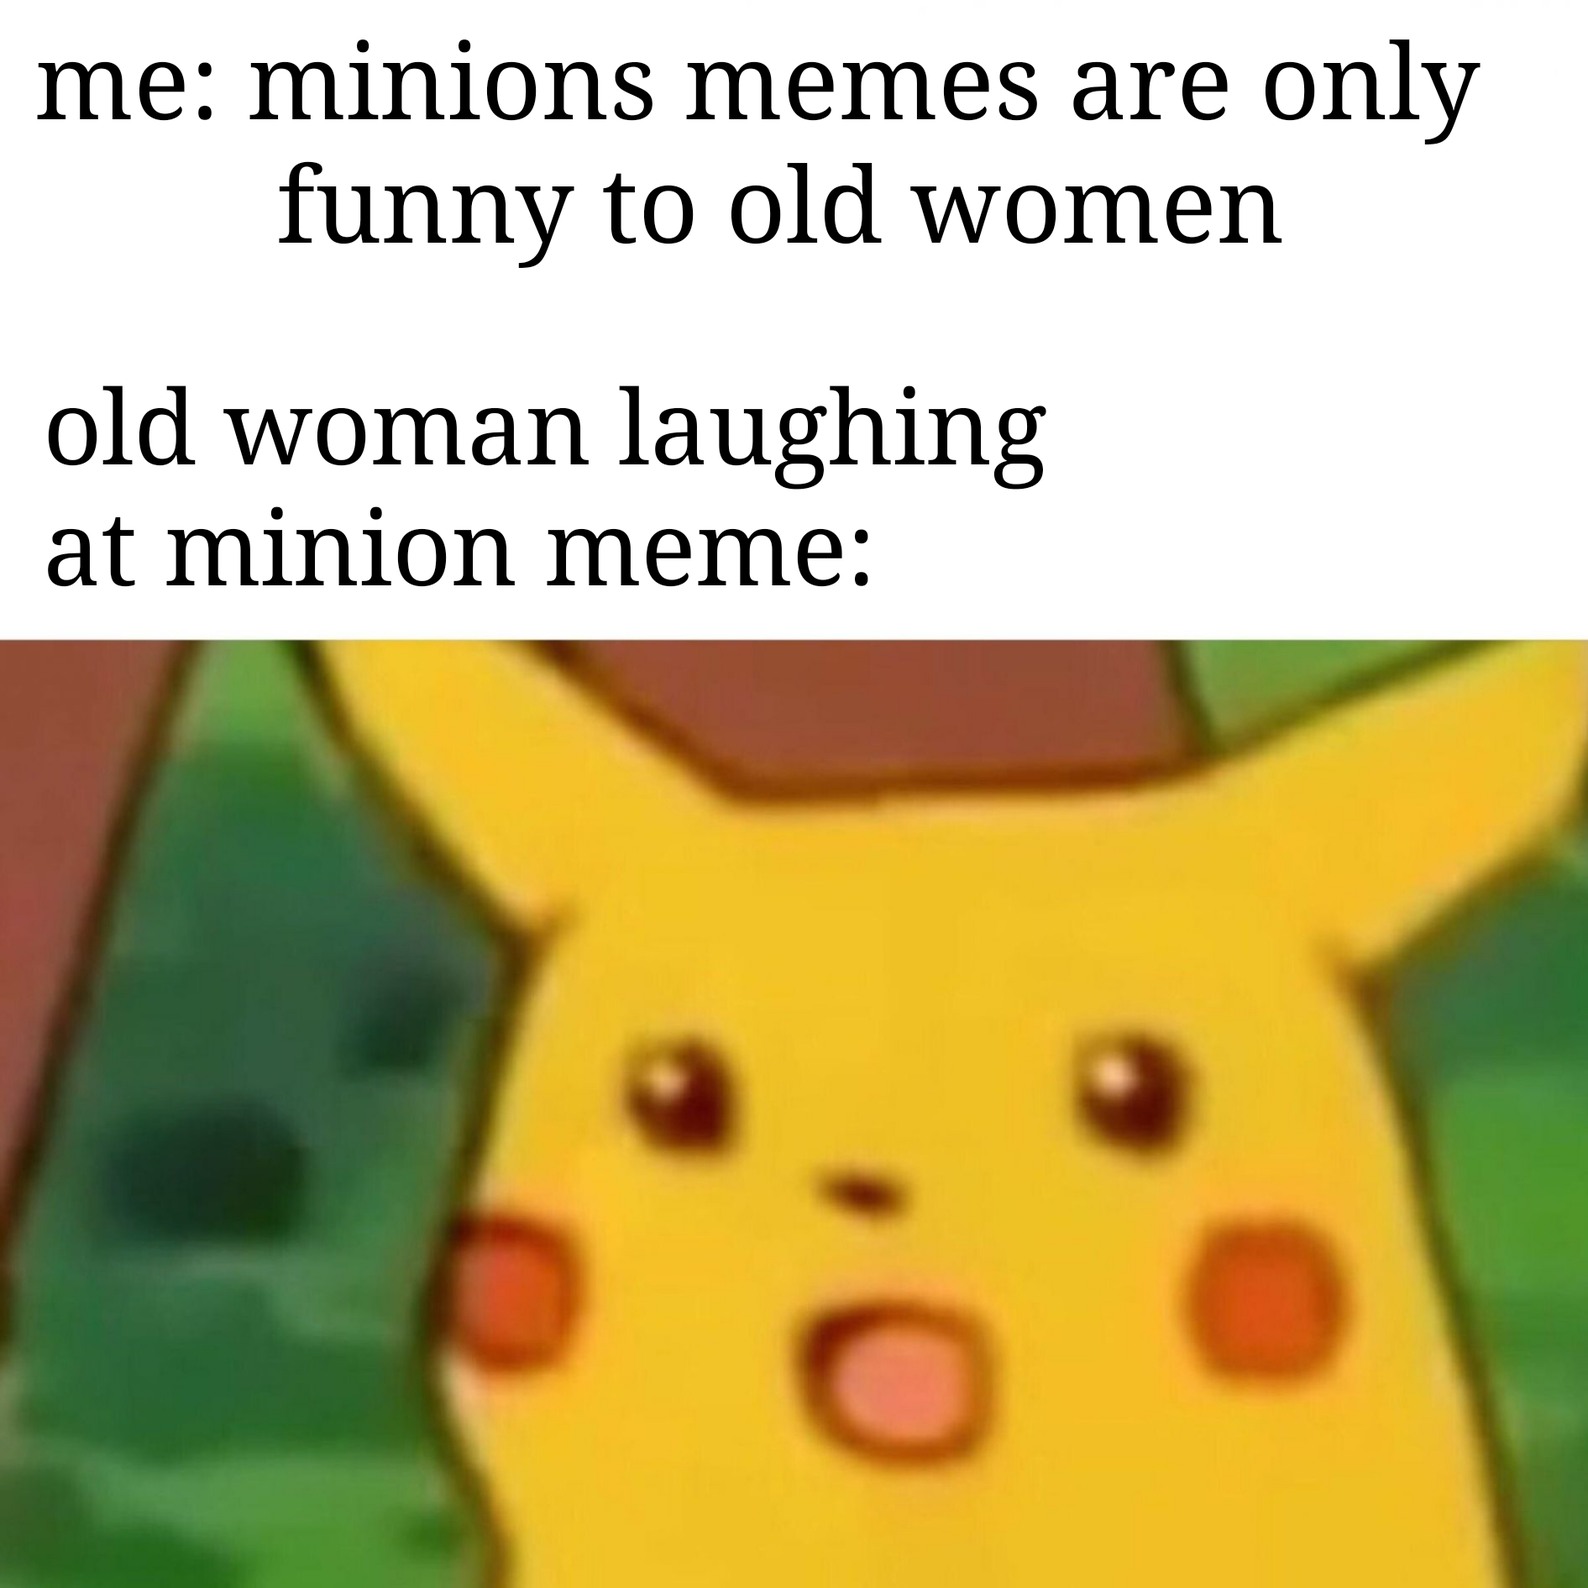 Minions suck - meme